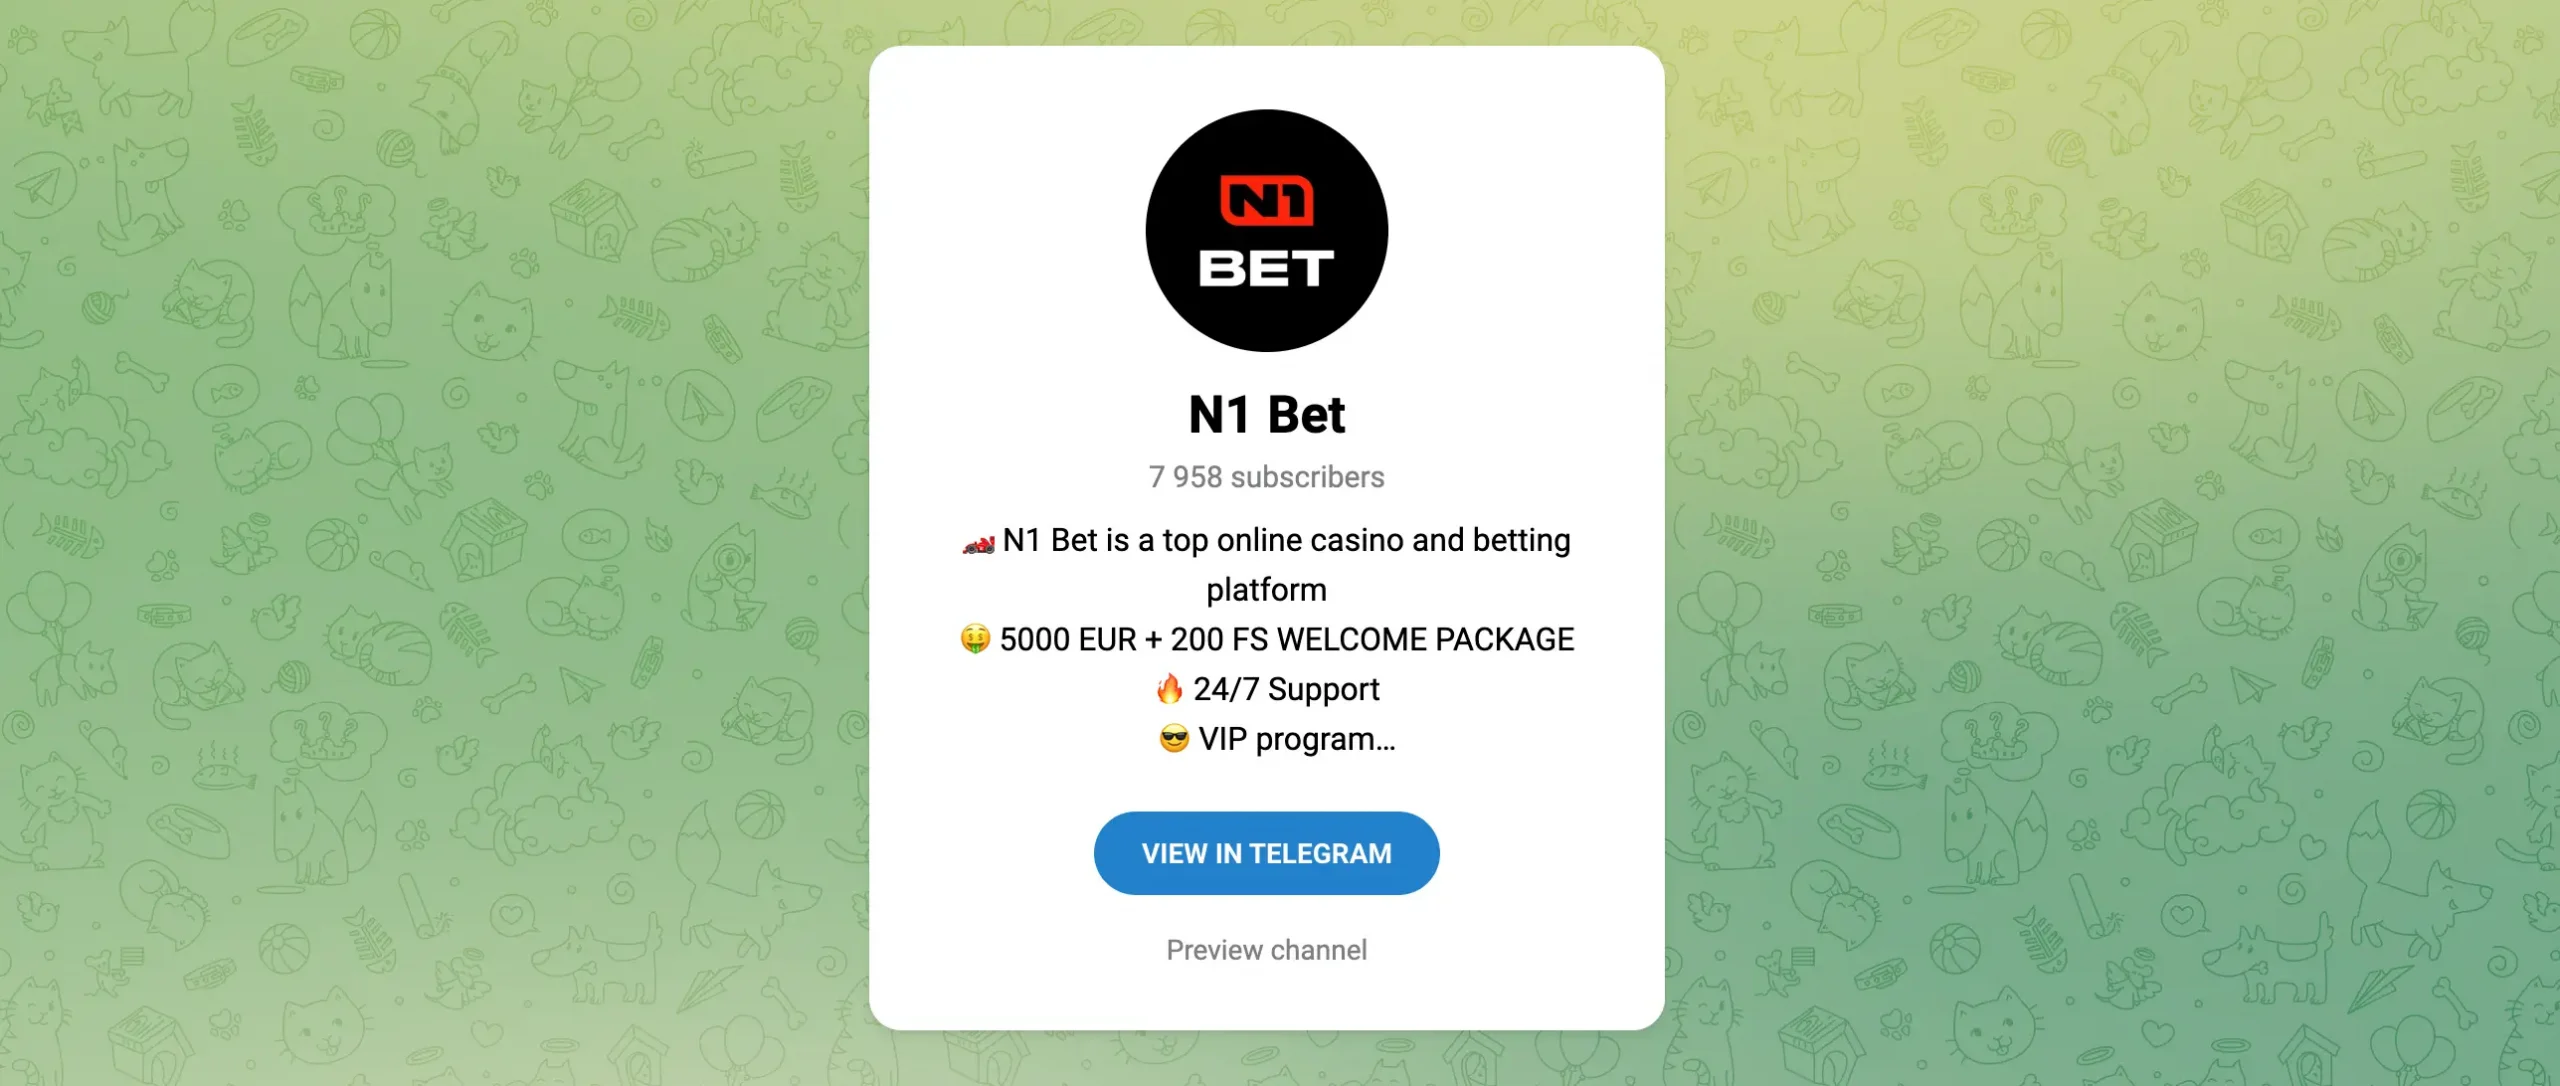 N1Bet Telegram Casino